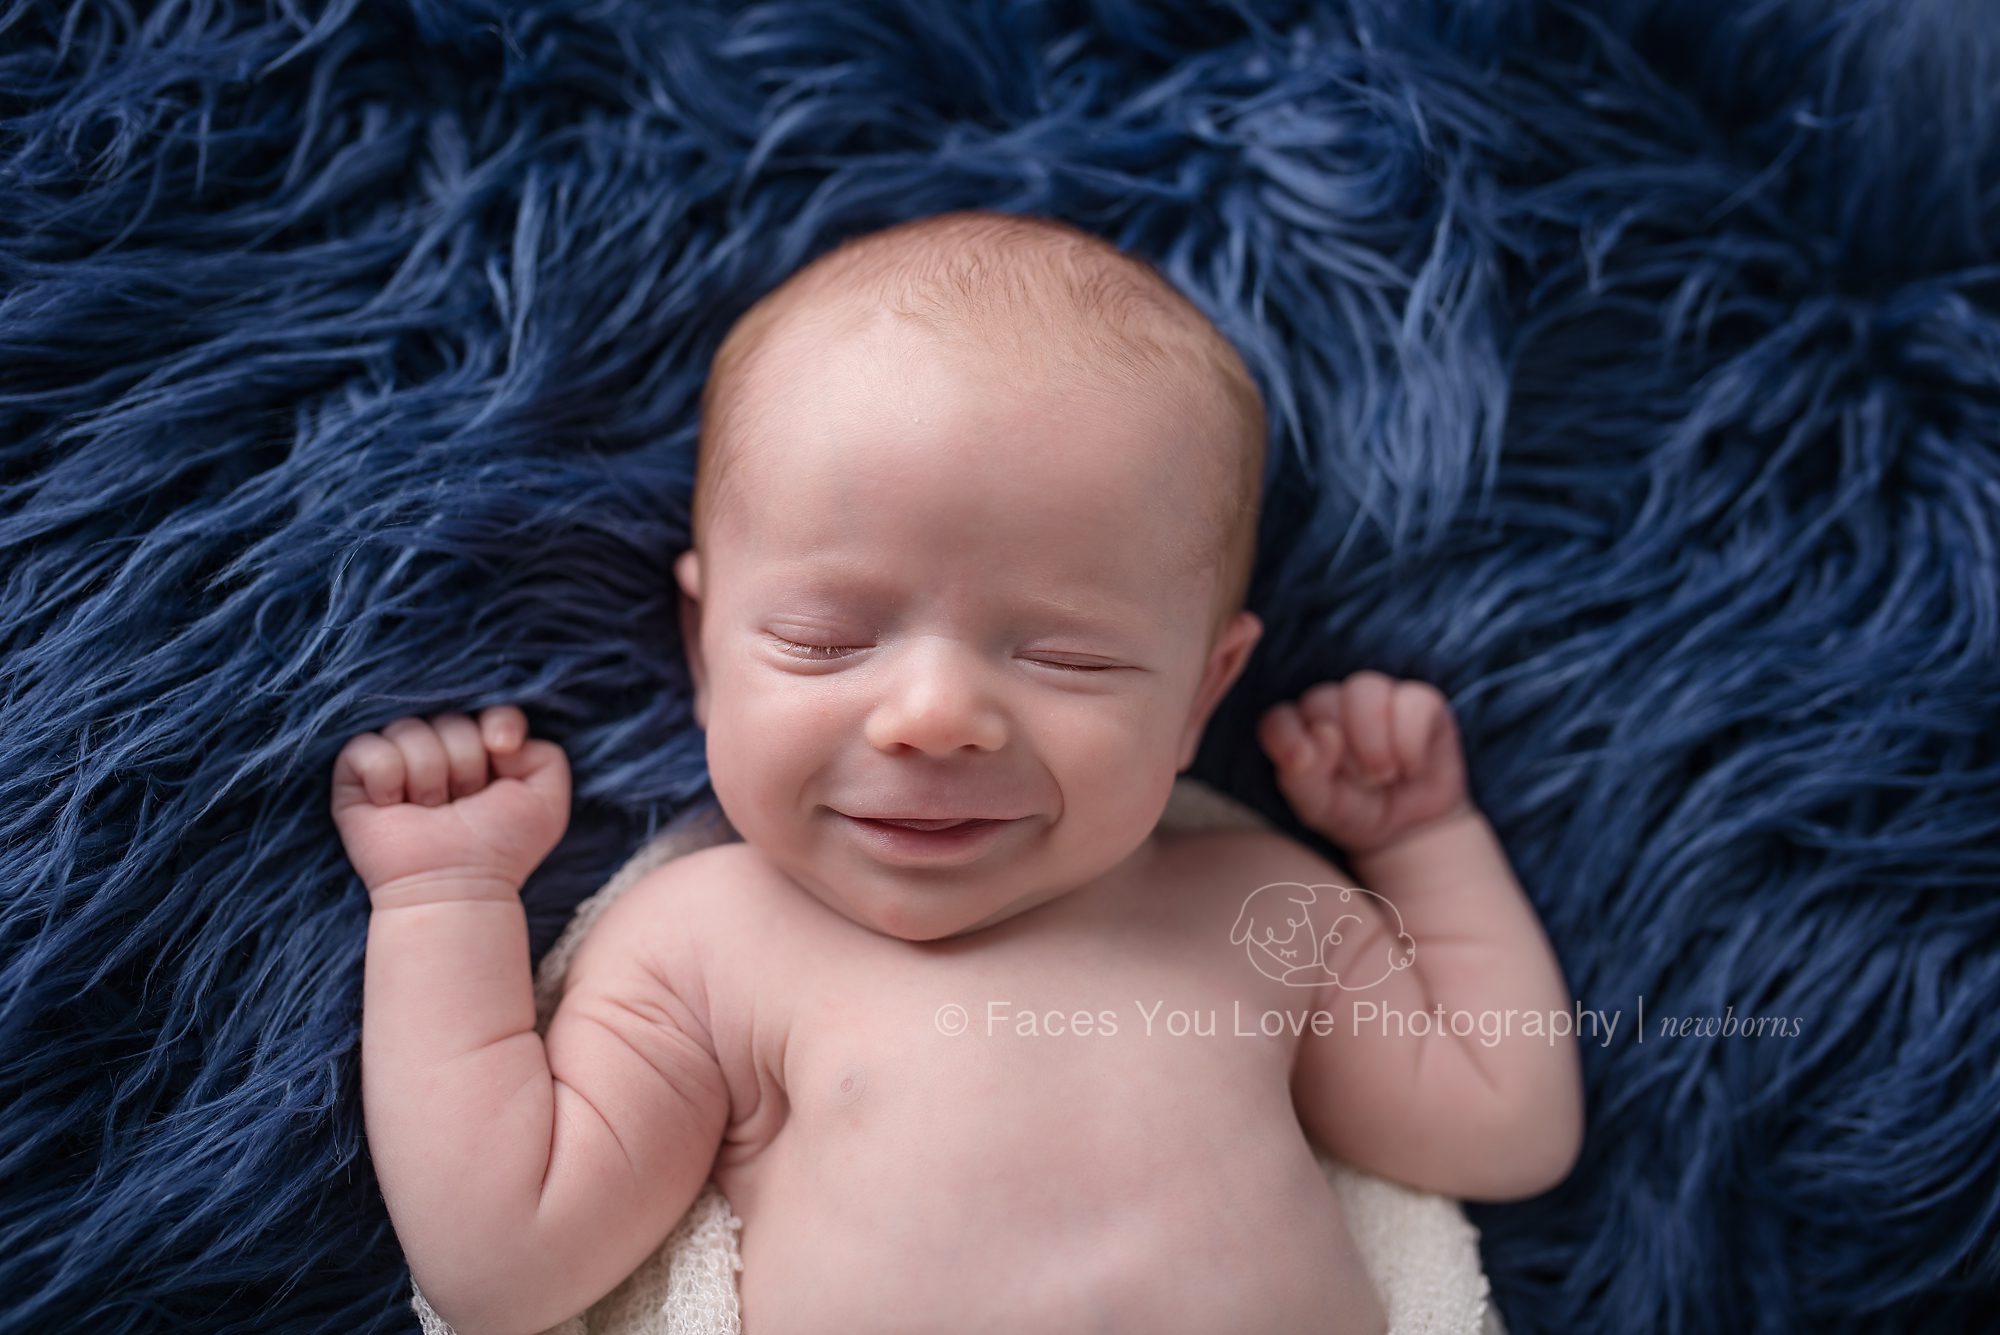 Newborn Smiling | facesyoulove.com